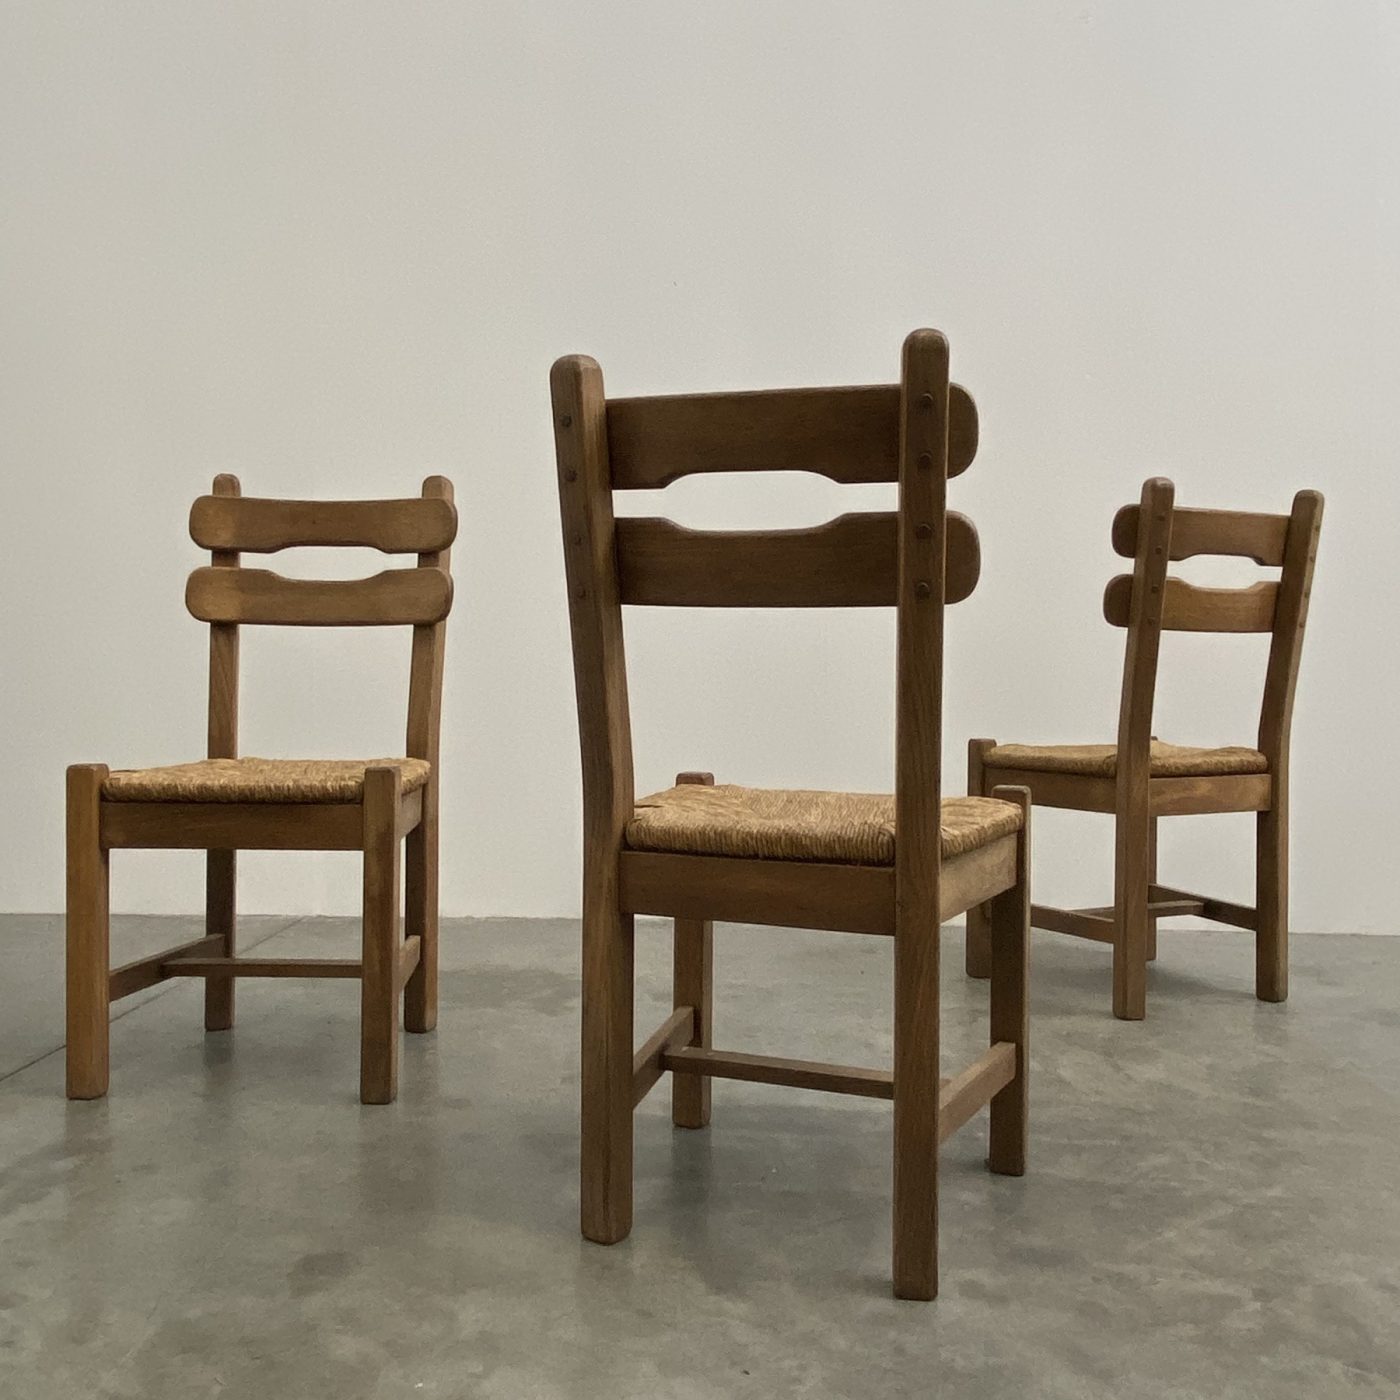 objet-vagabond-brutalist-chairs0004